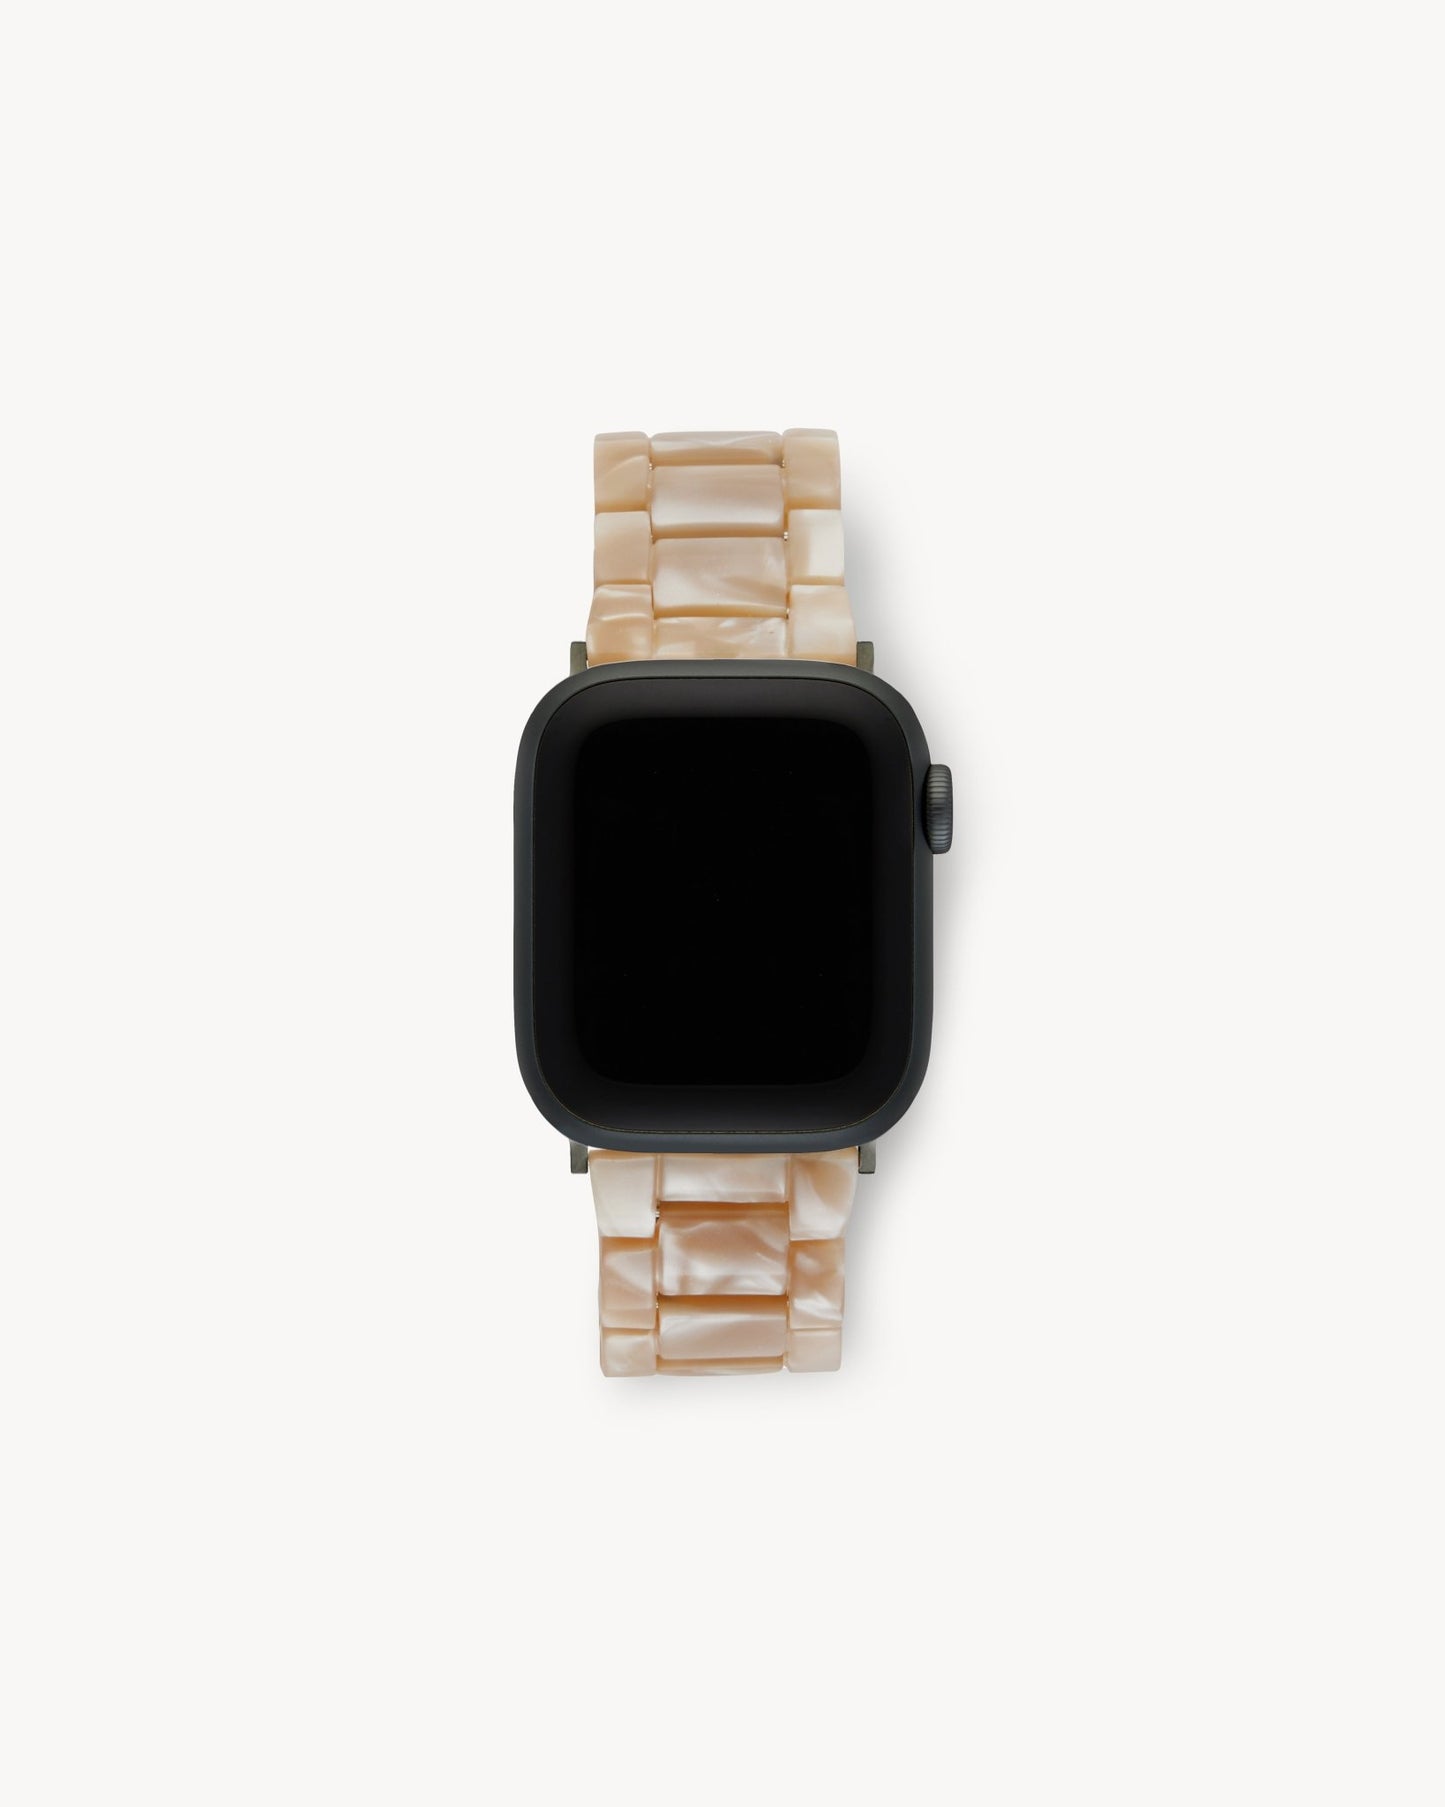 Apple Watch Band in Sand Shell - MACHETE